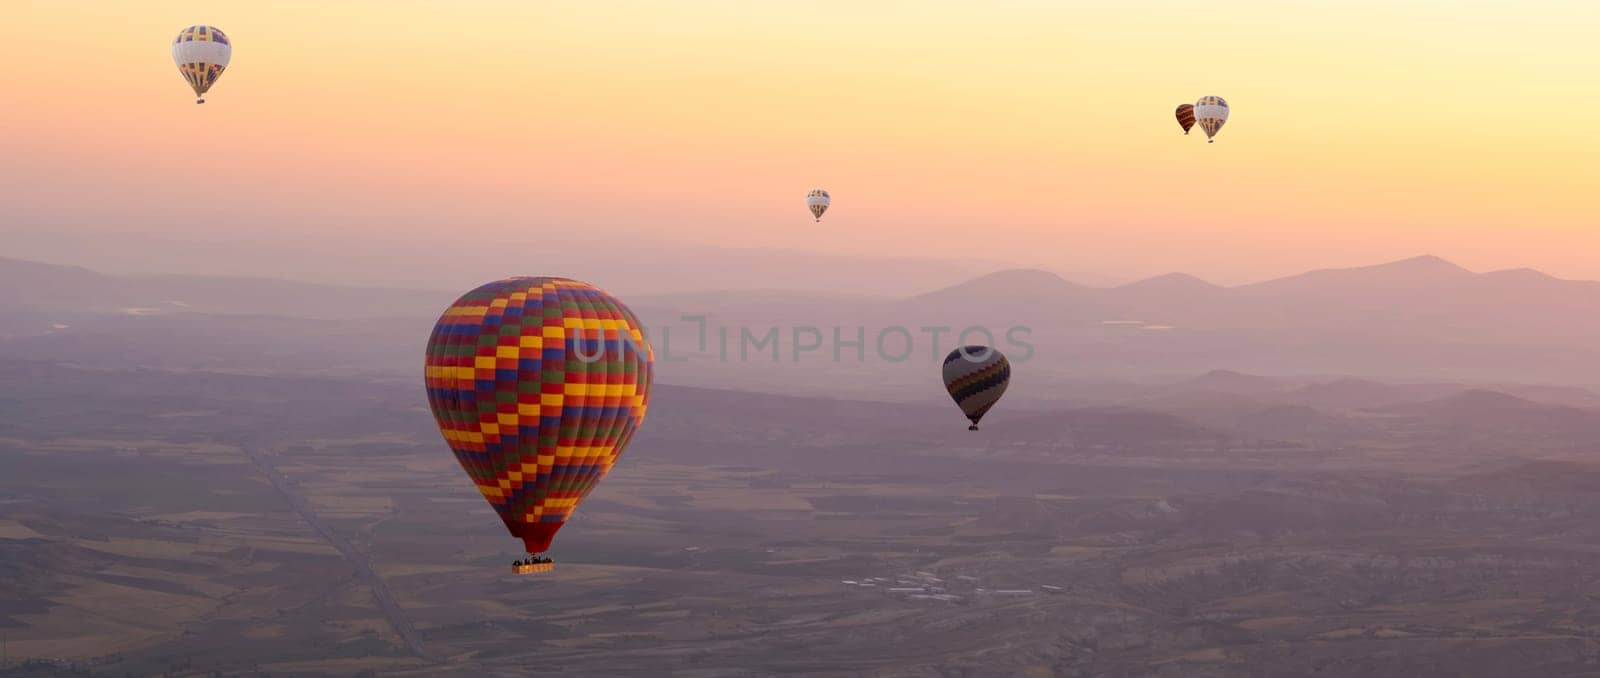 Hot air balloon festival in Cappadocia, Turkey by GekaSkr